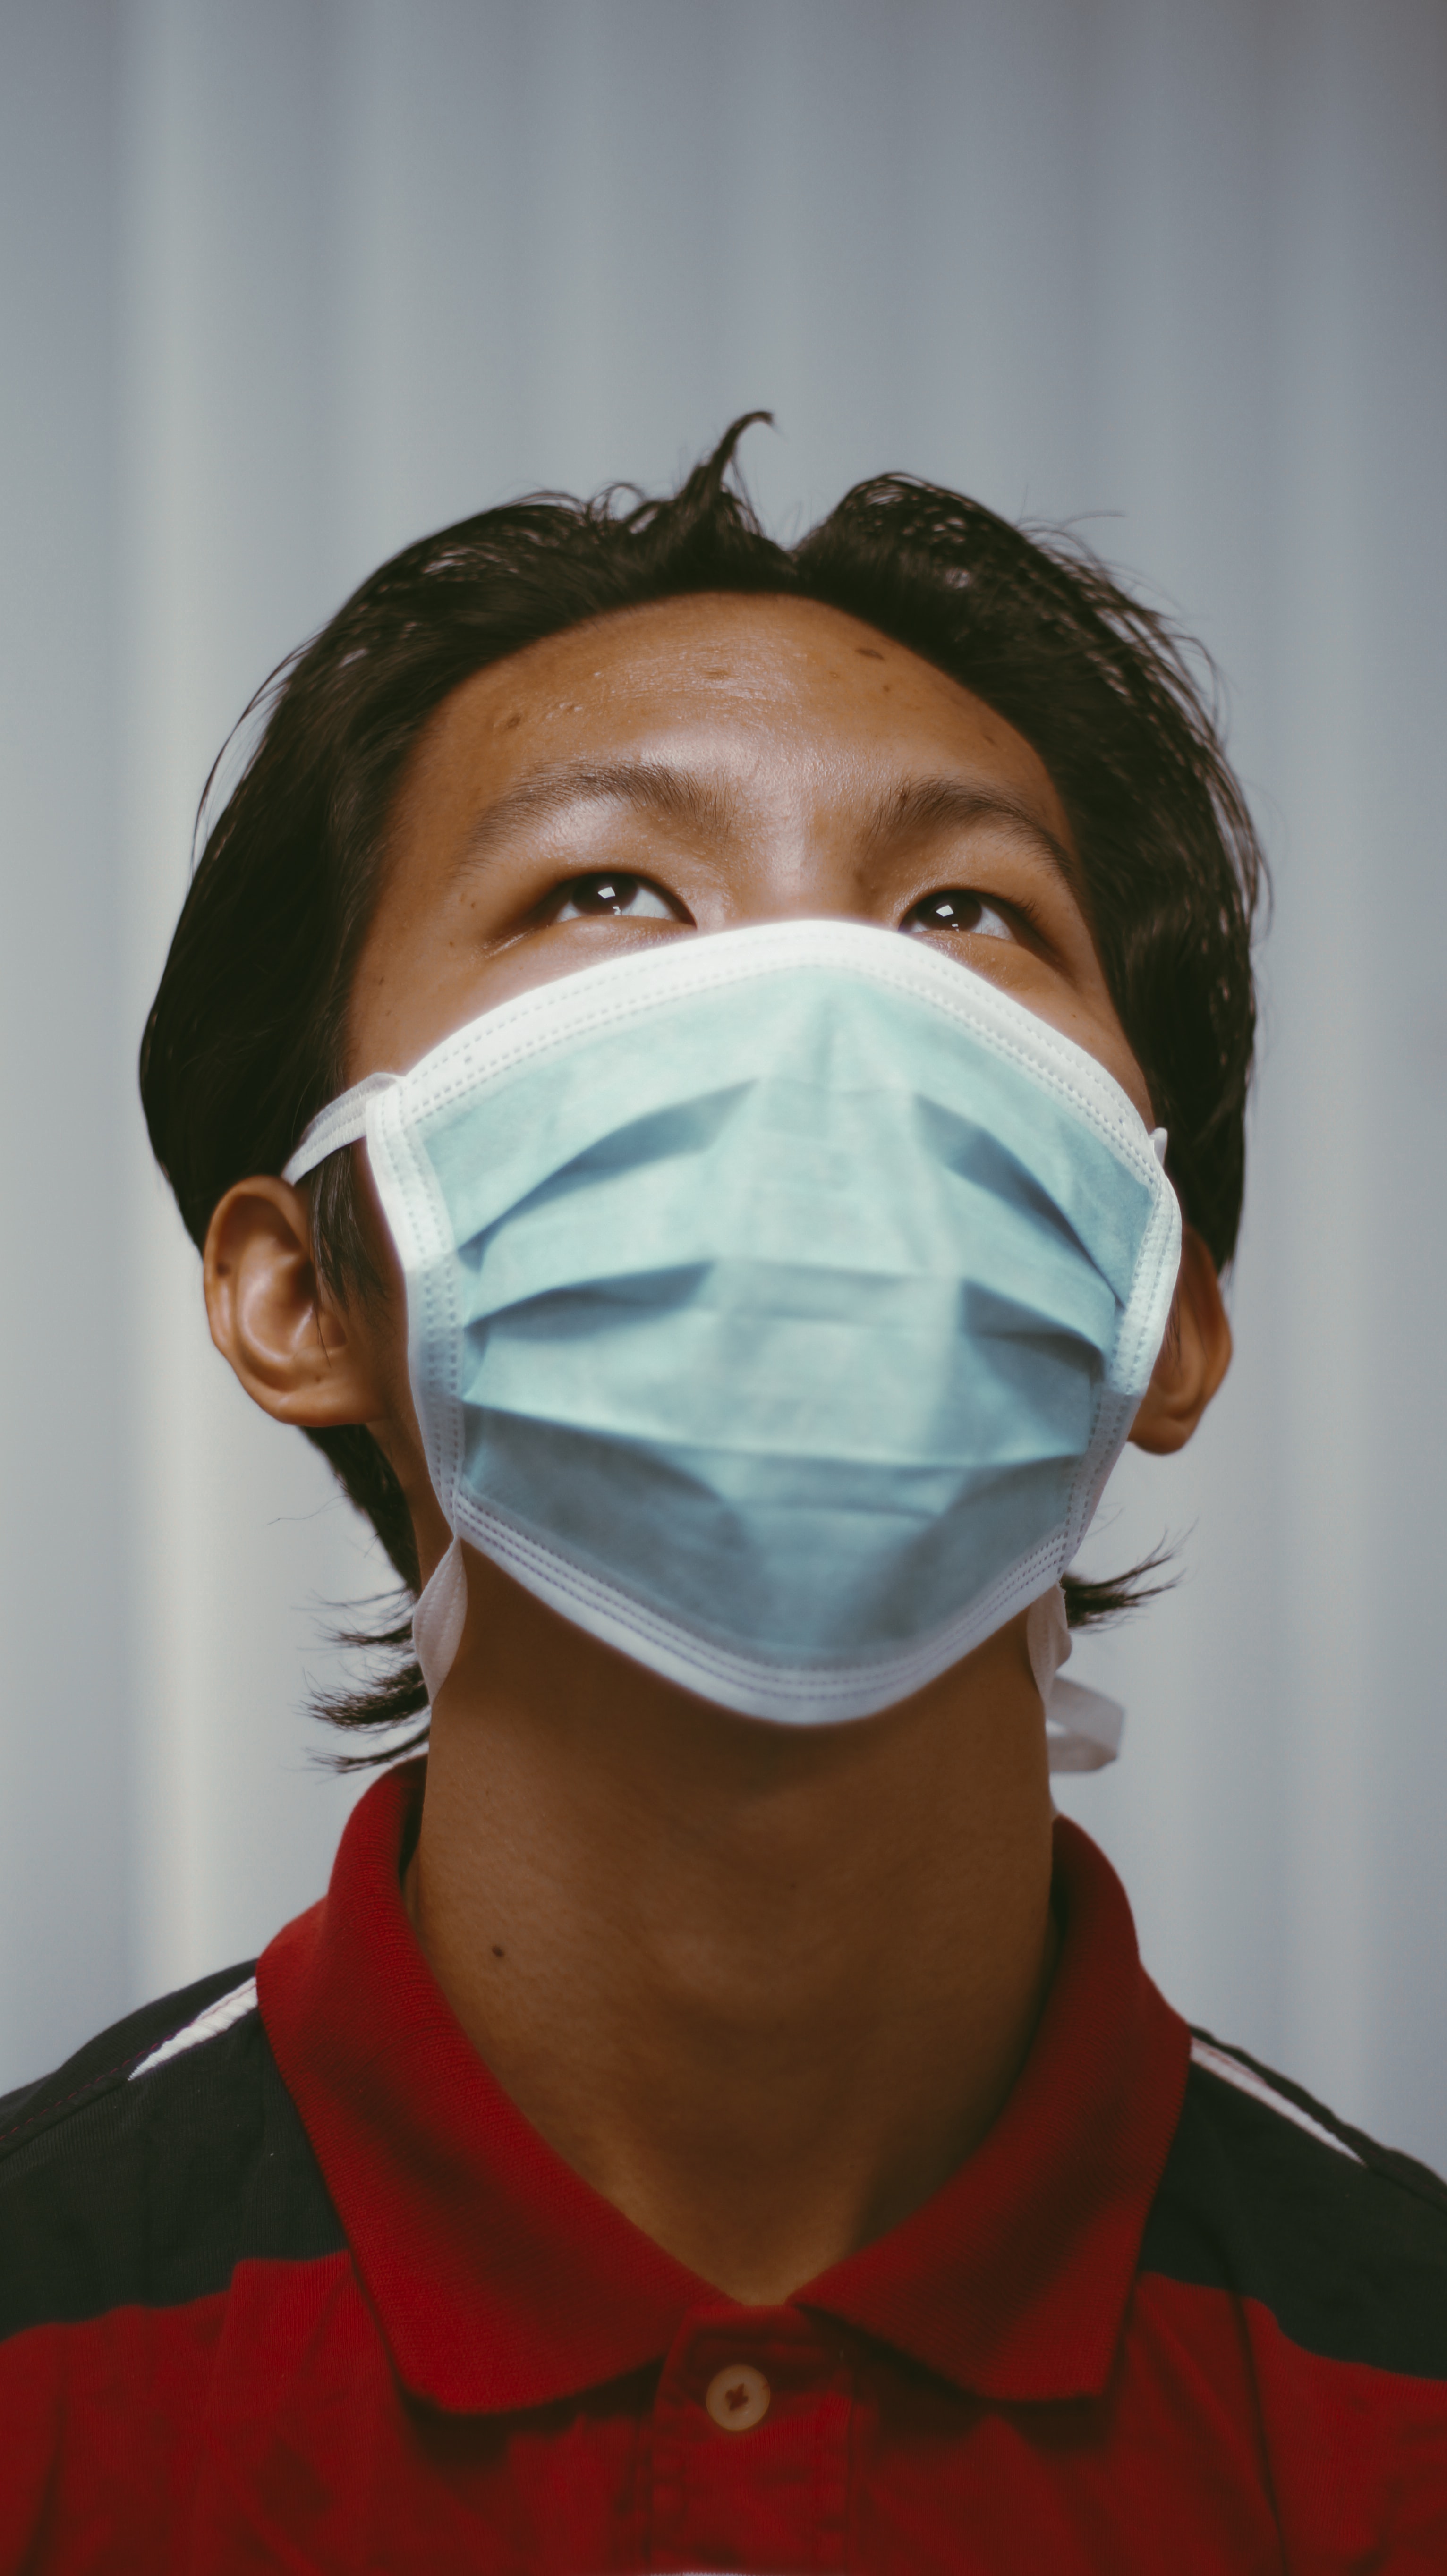 Doctor Mask Pictures | Download Free Images on Unsplash